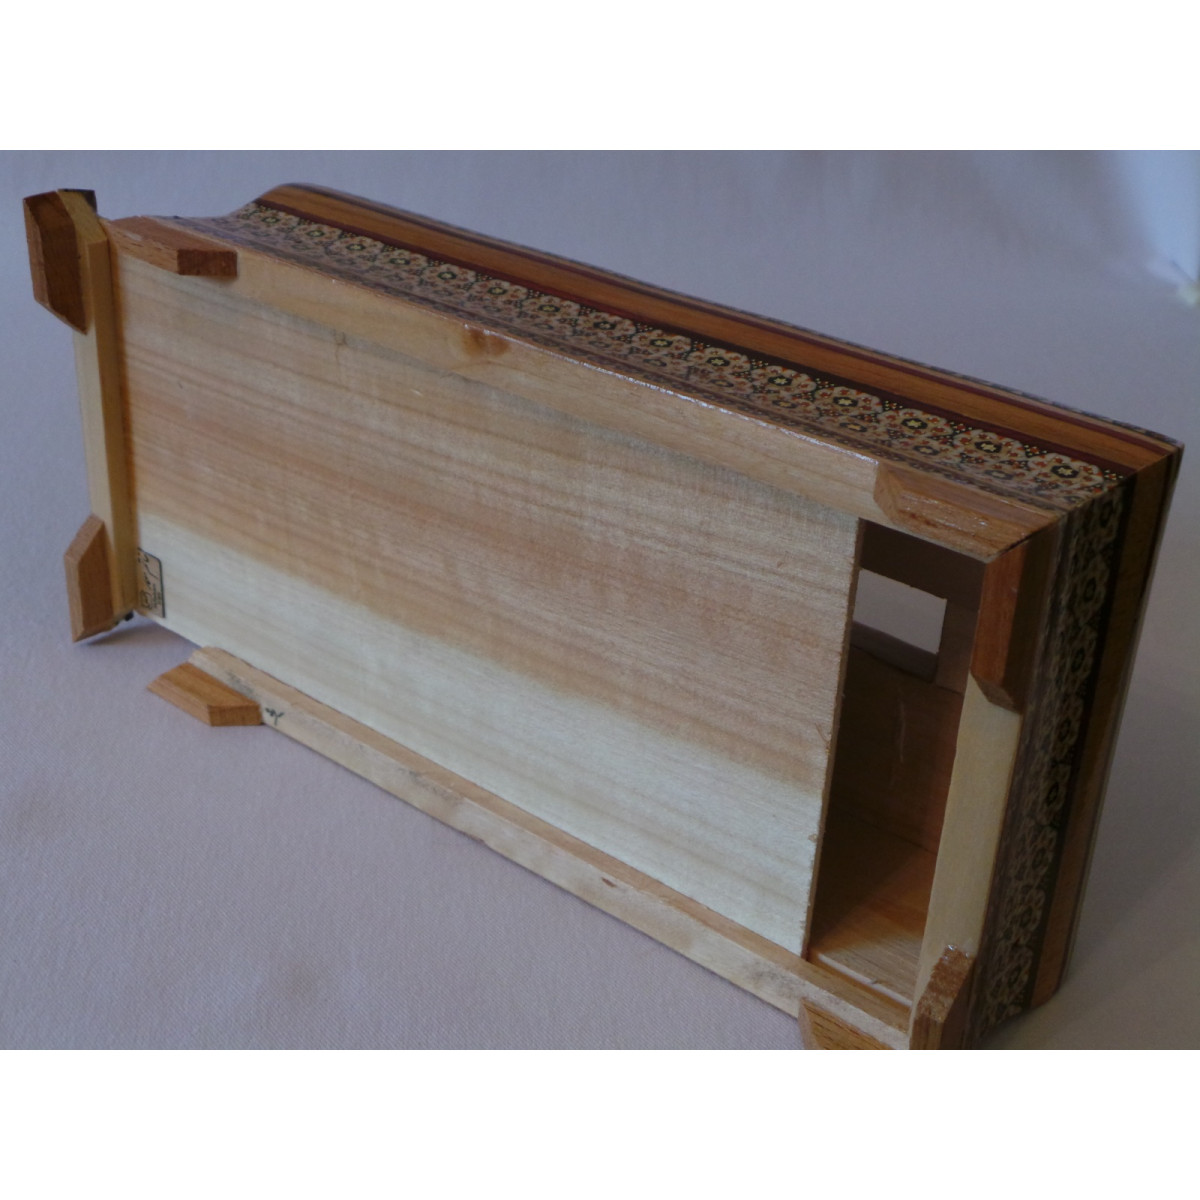 Khatam on Wood Tissue Box - HKH2046-Persian Handicrafts